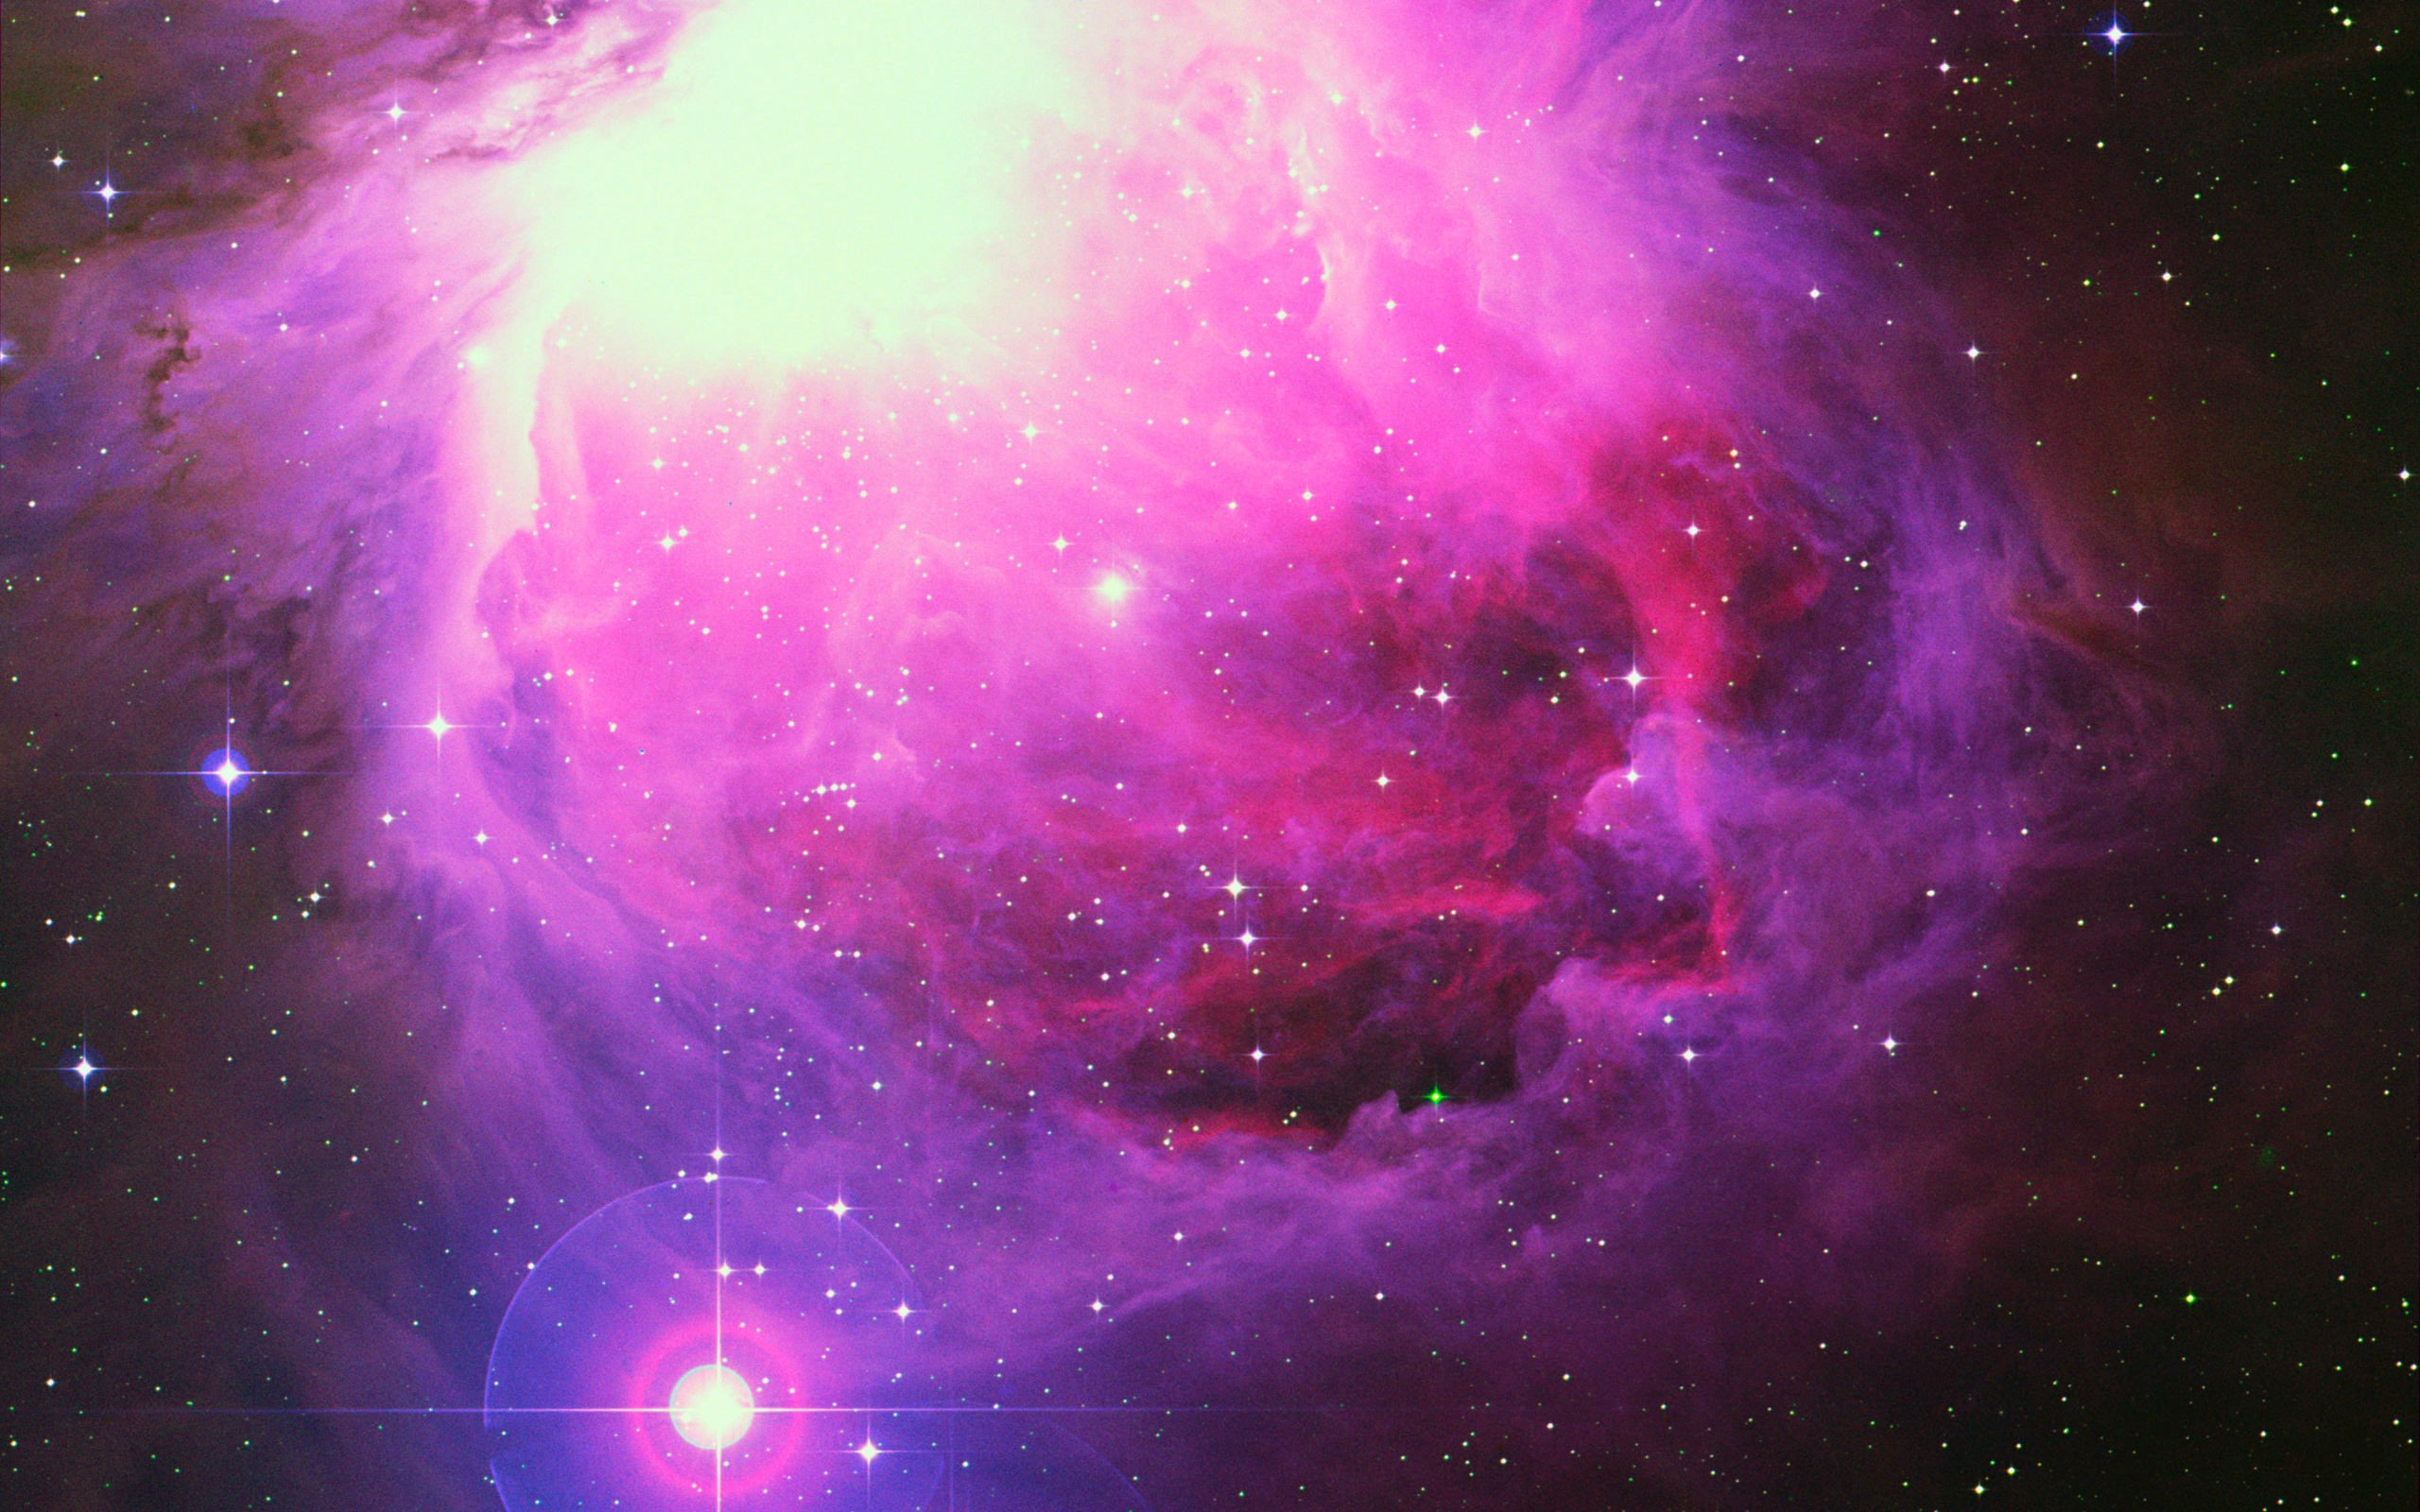 espacio fondos de pantalla tumblr,nebulosa,espacio exterior,objeto astronómico,púrpura,universo